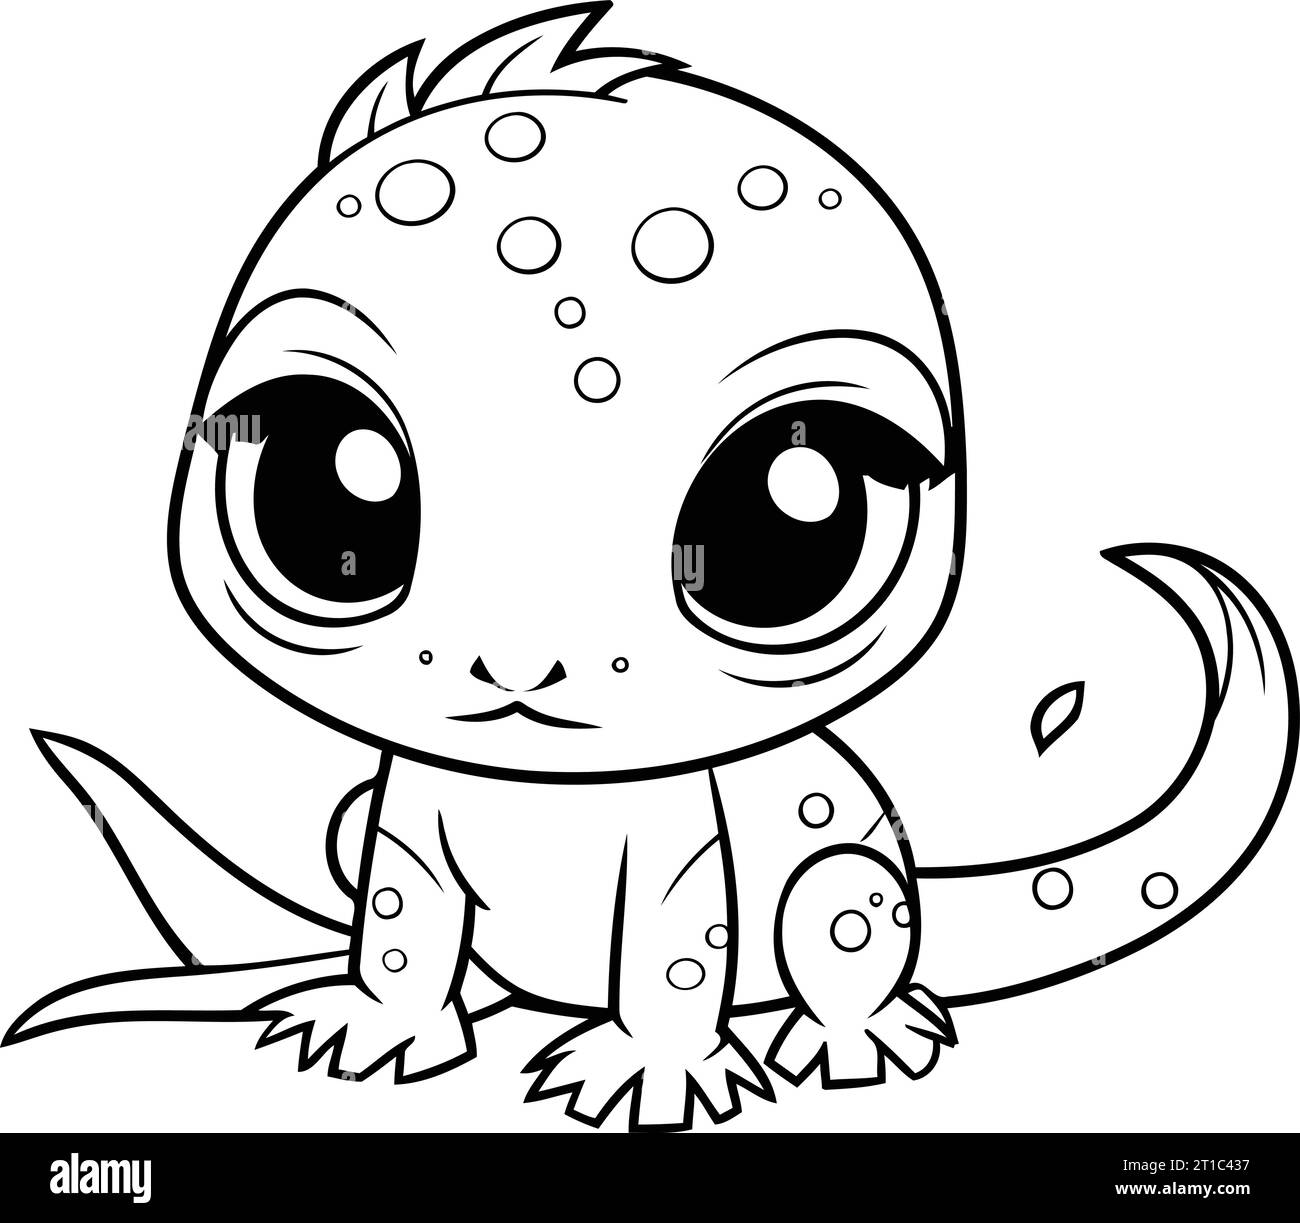 Axolotl Coloring Book for Kids Ages 4-8: Fun children's art book